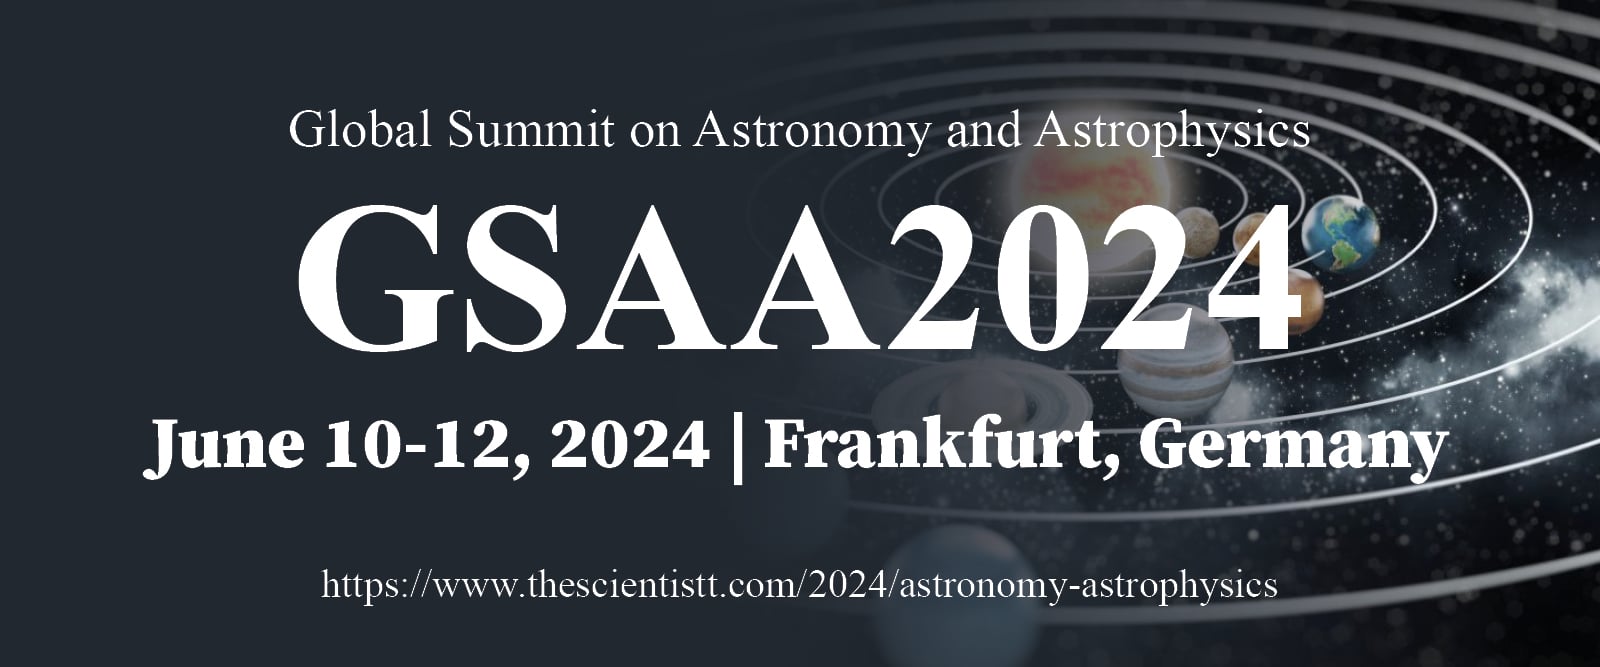 Global Summit on Astronomy and Astrophysics (GSAA 2024)